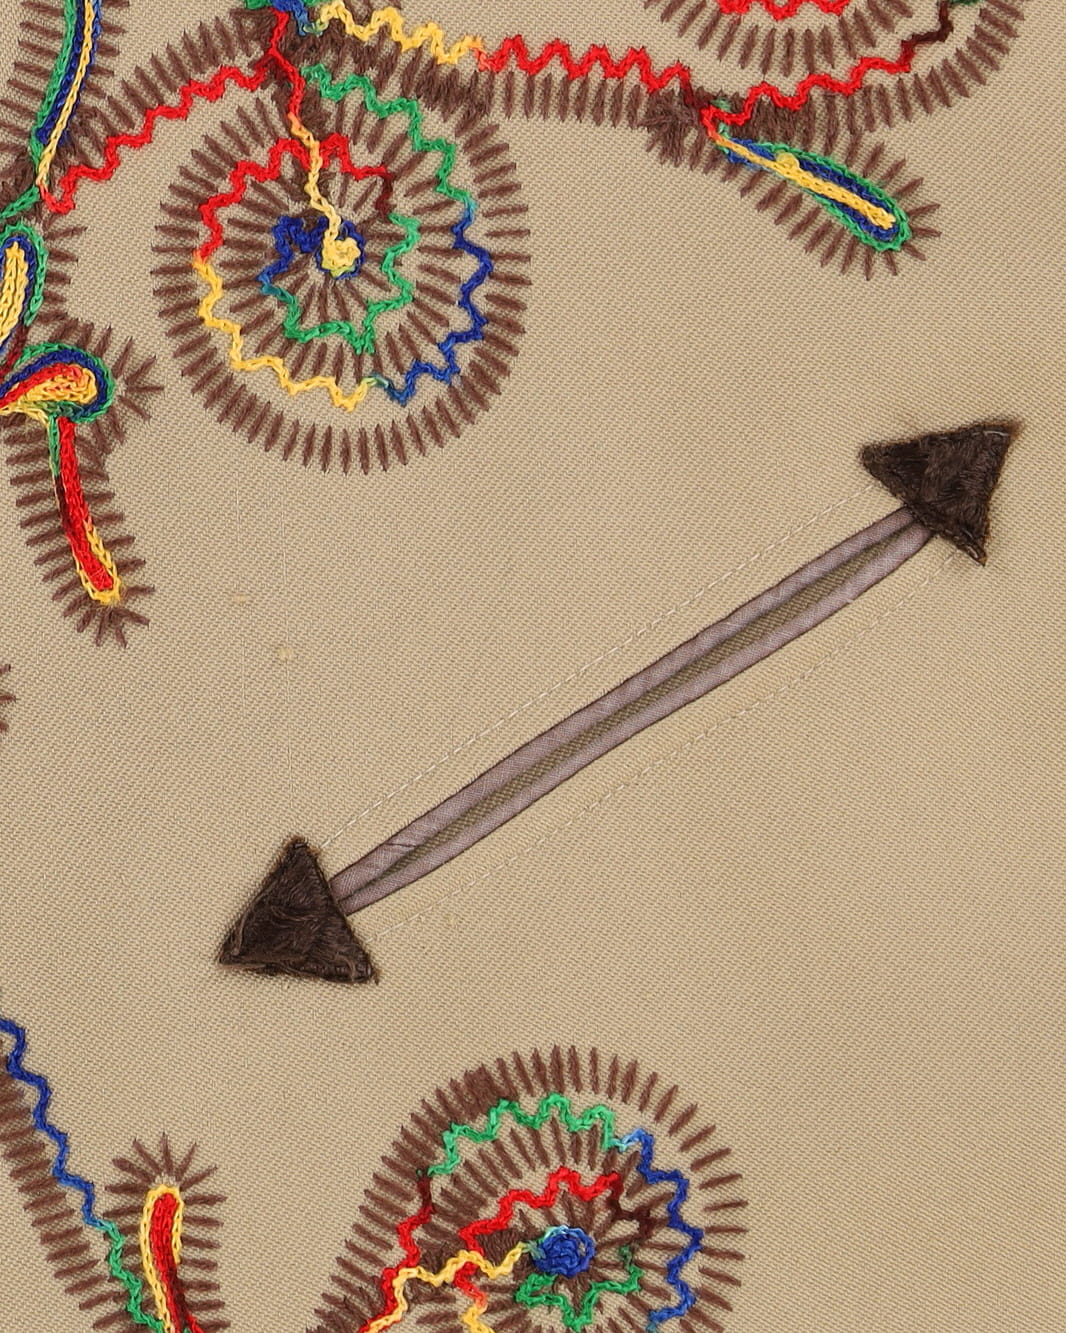 Vintage 1970s Beige Embroidered Western Shirt - L